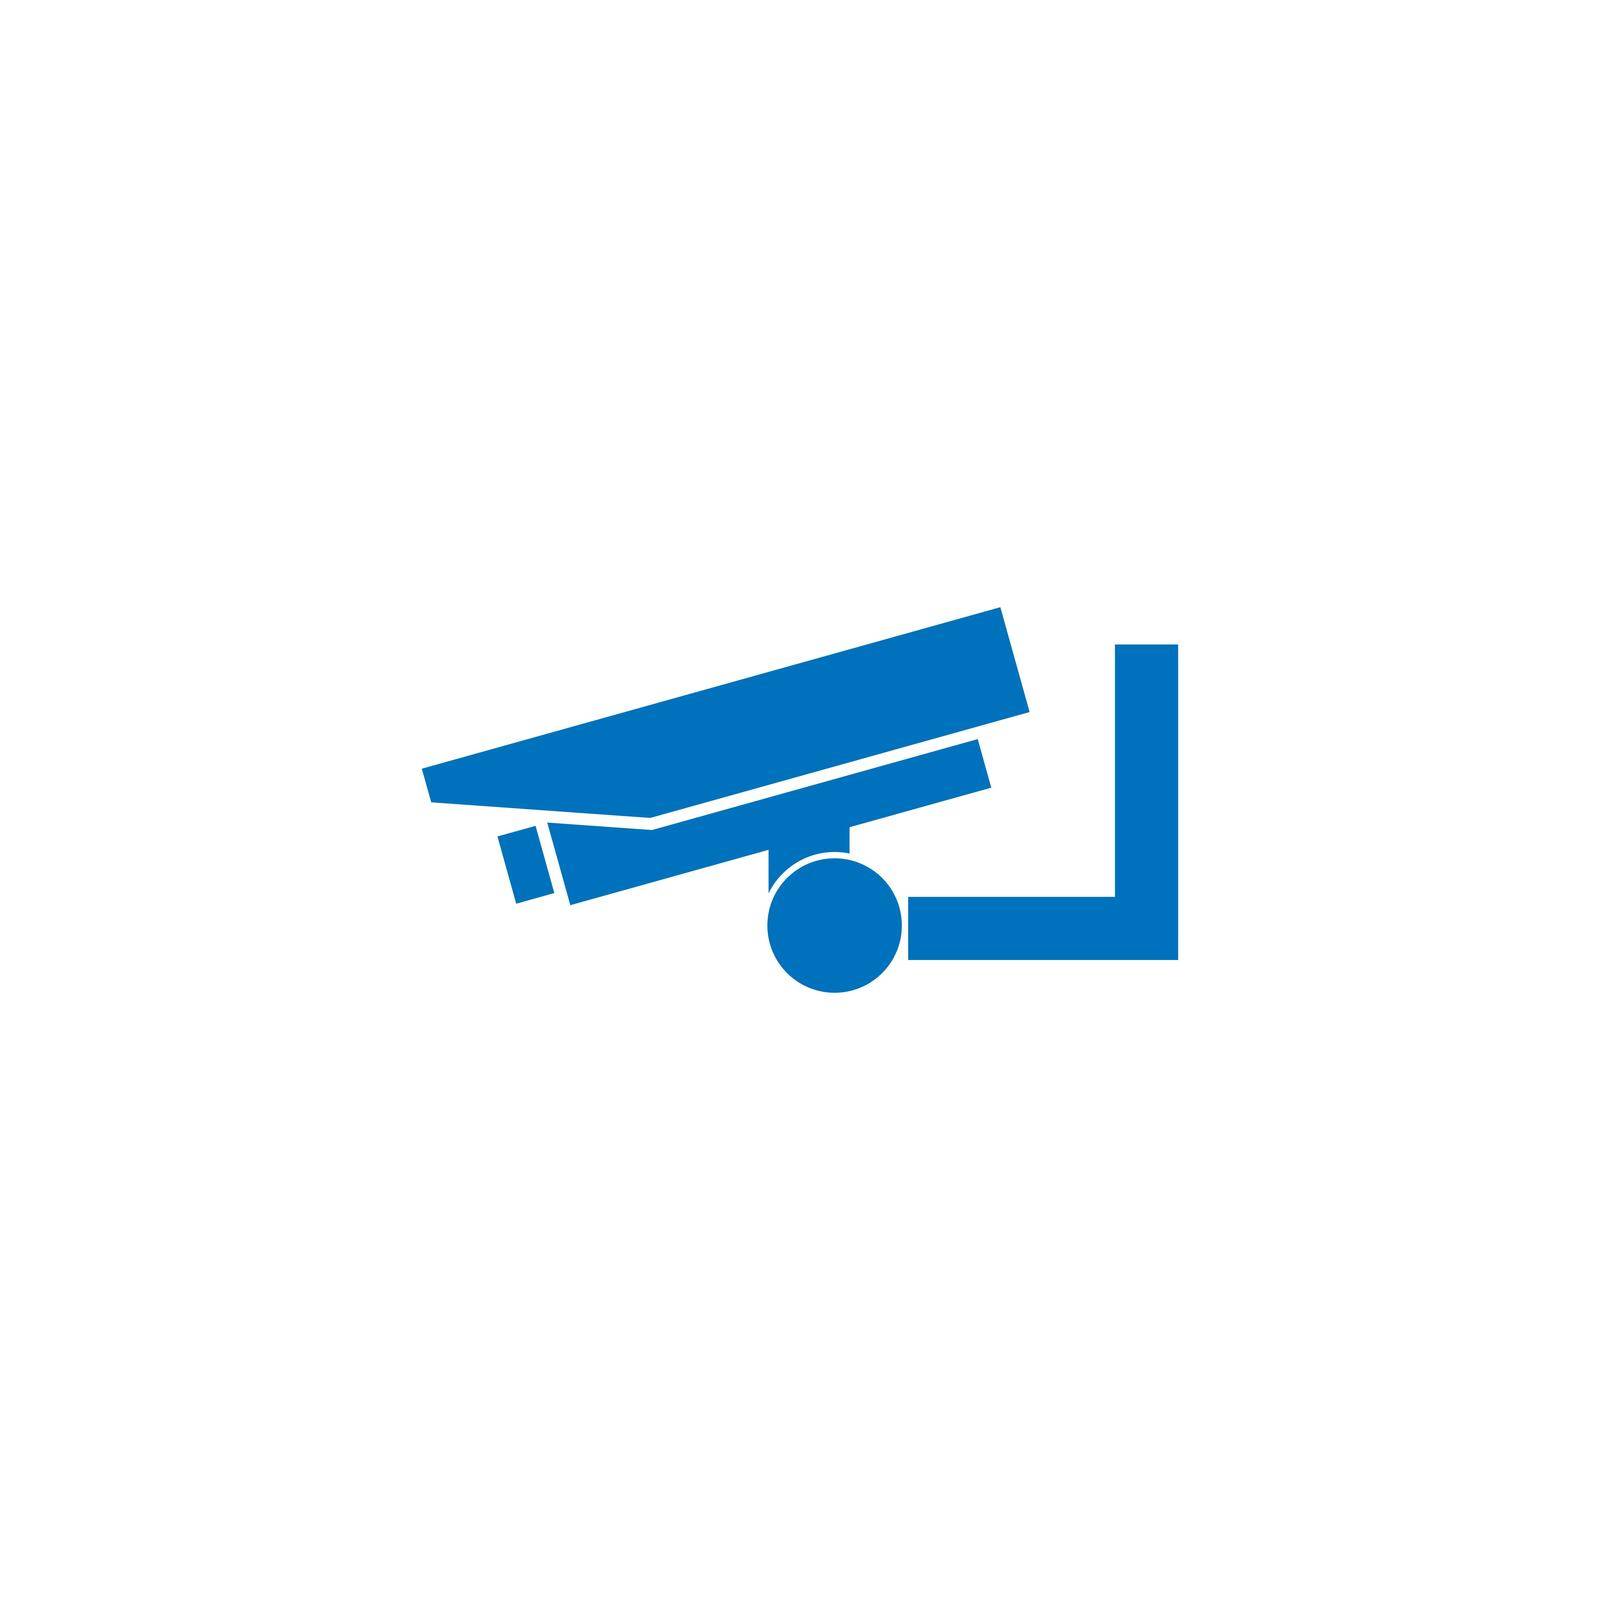 CCTV icon logo design vector by bellaxbudhong3